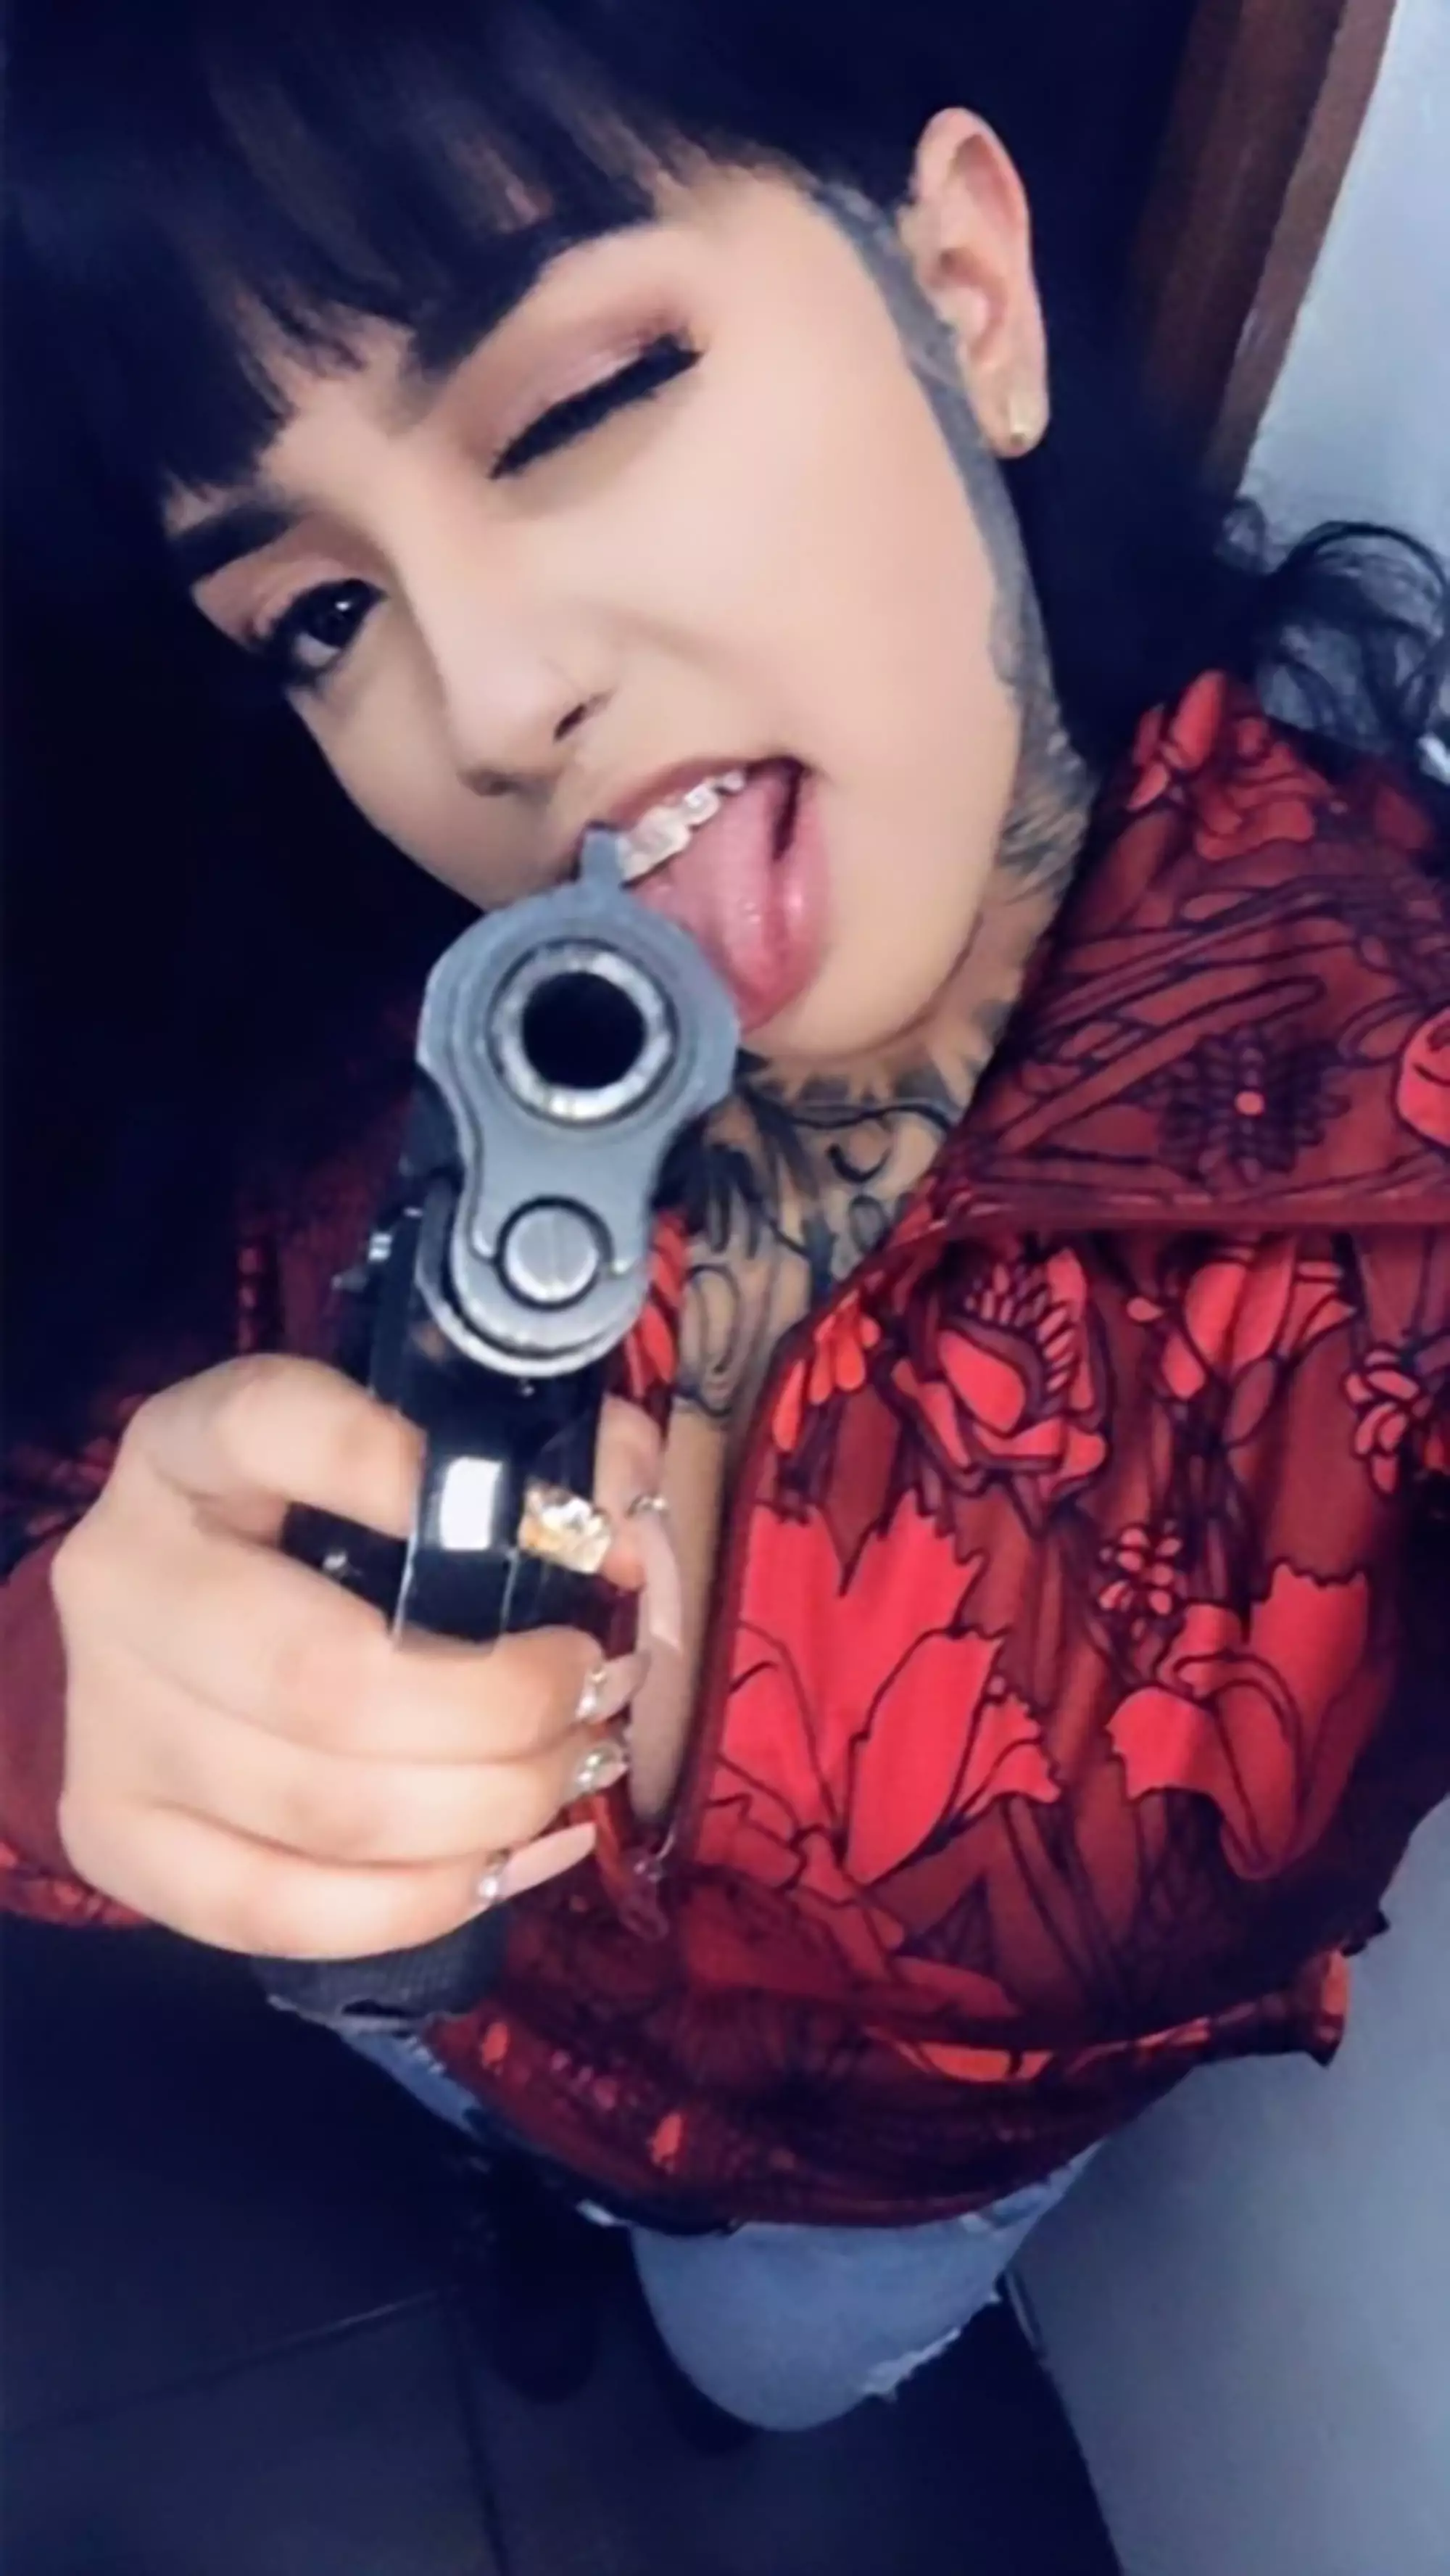 A photo of Keilanny Boo with a gun.